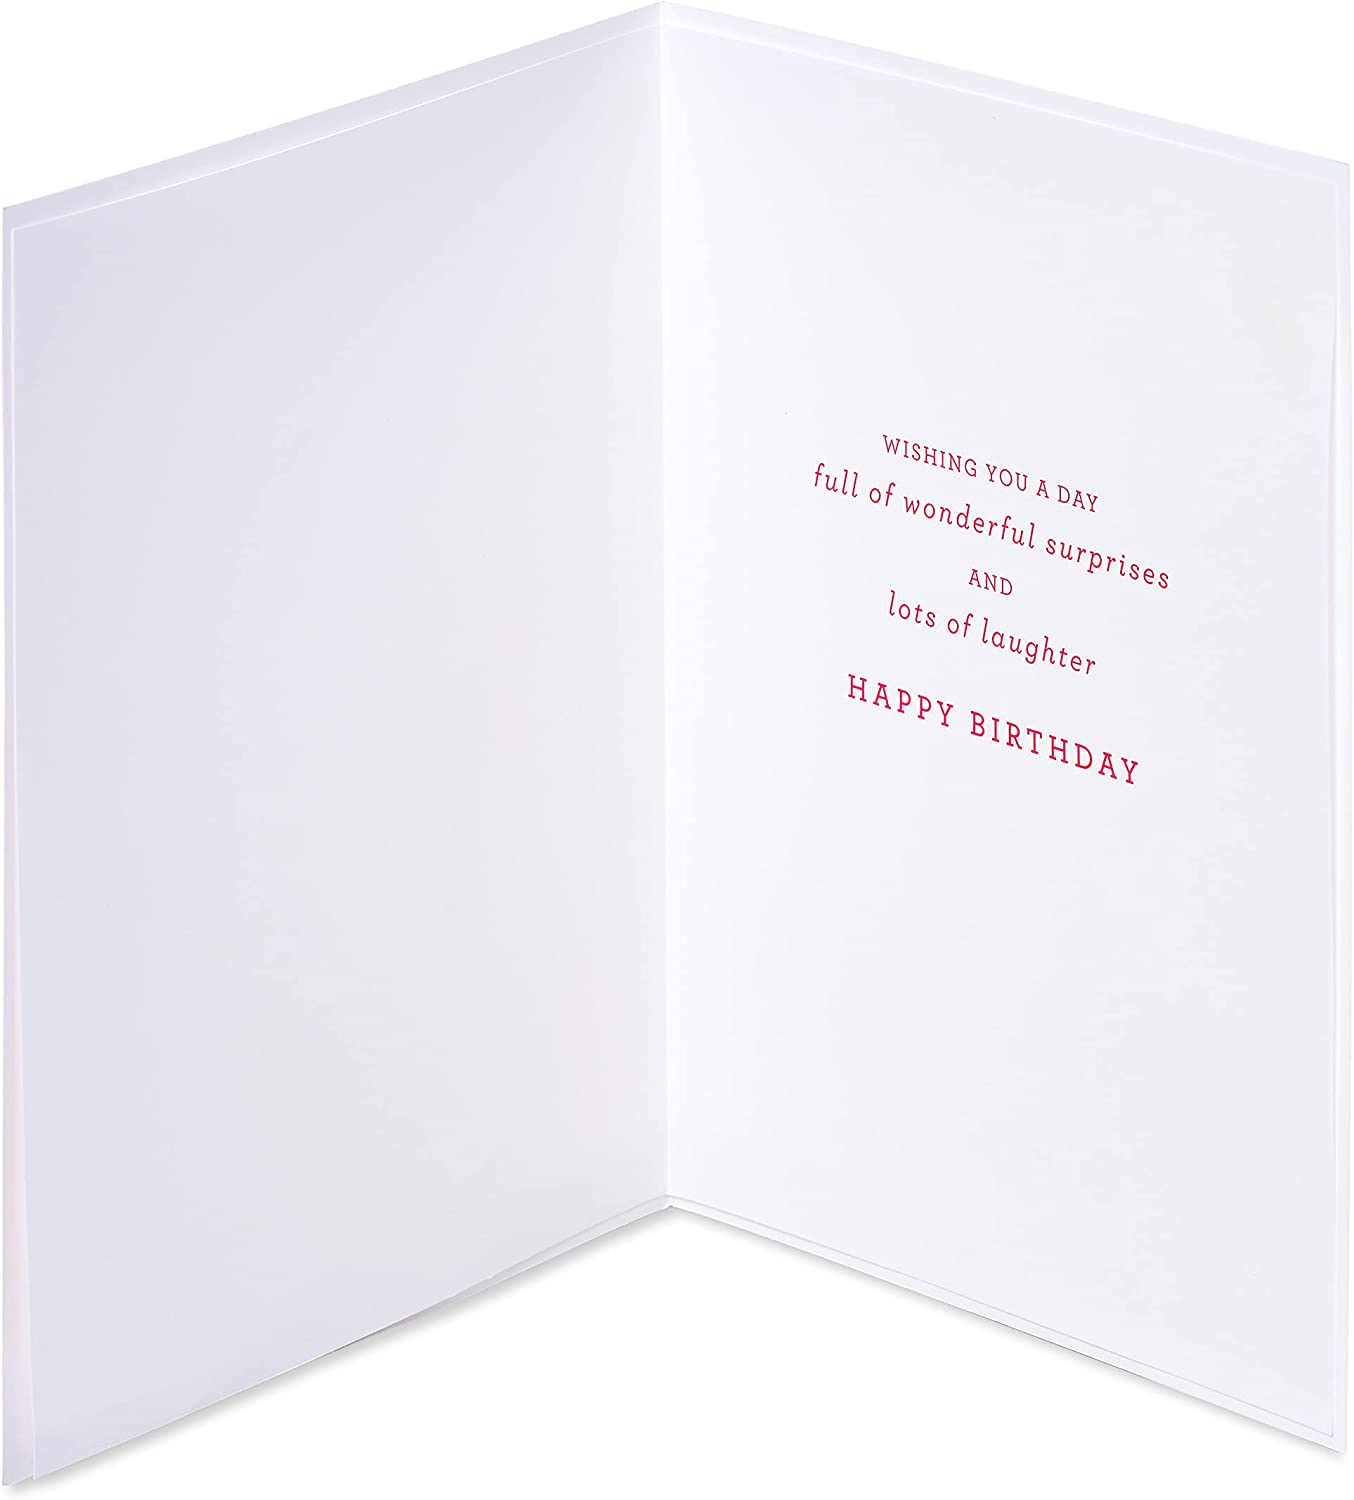 Papyrus Birthday Card for Her - BCRF Partnership (Wonderful Surprises)